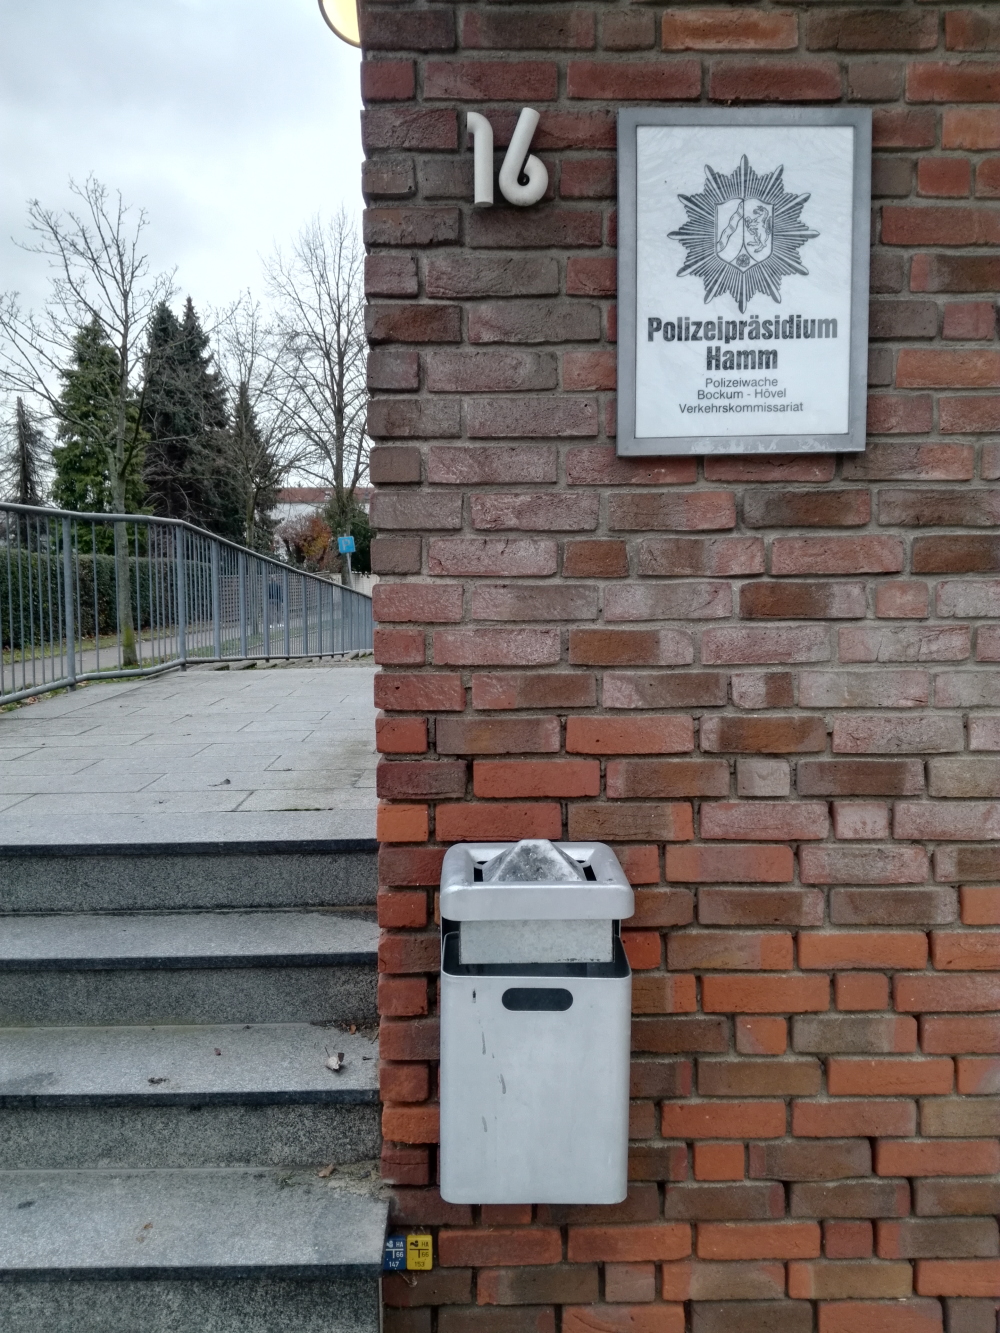 Polizeipräsidium Hamm, Bockum-Hövel. Wollschlägers Arbeisplatz. Foto: Horst Blume